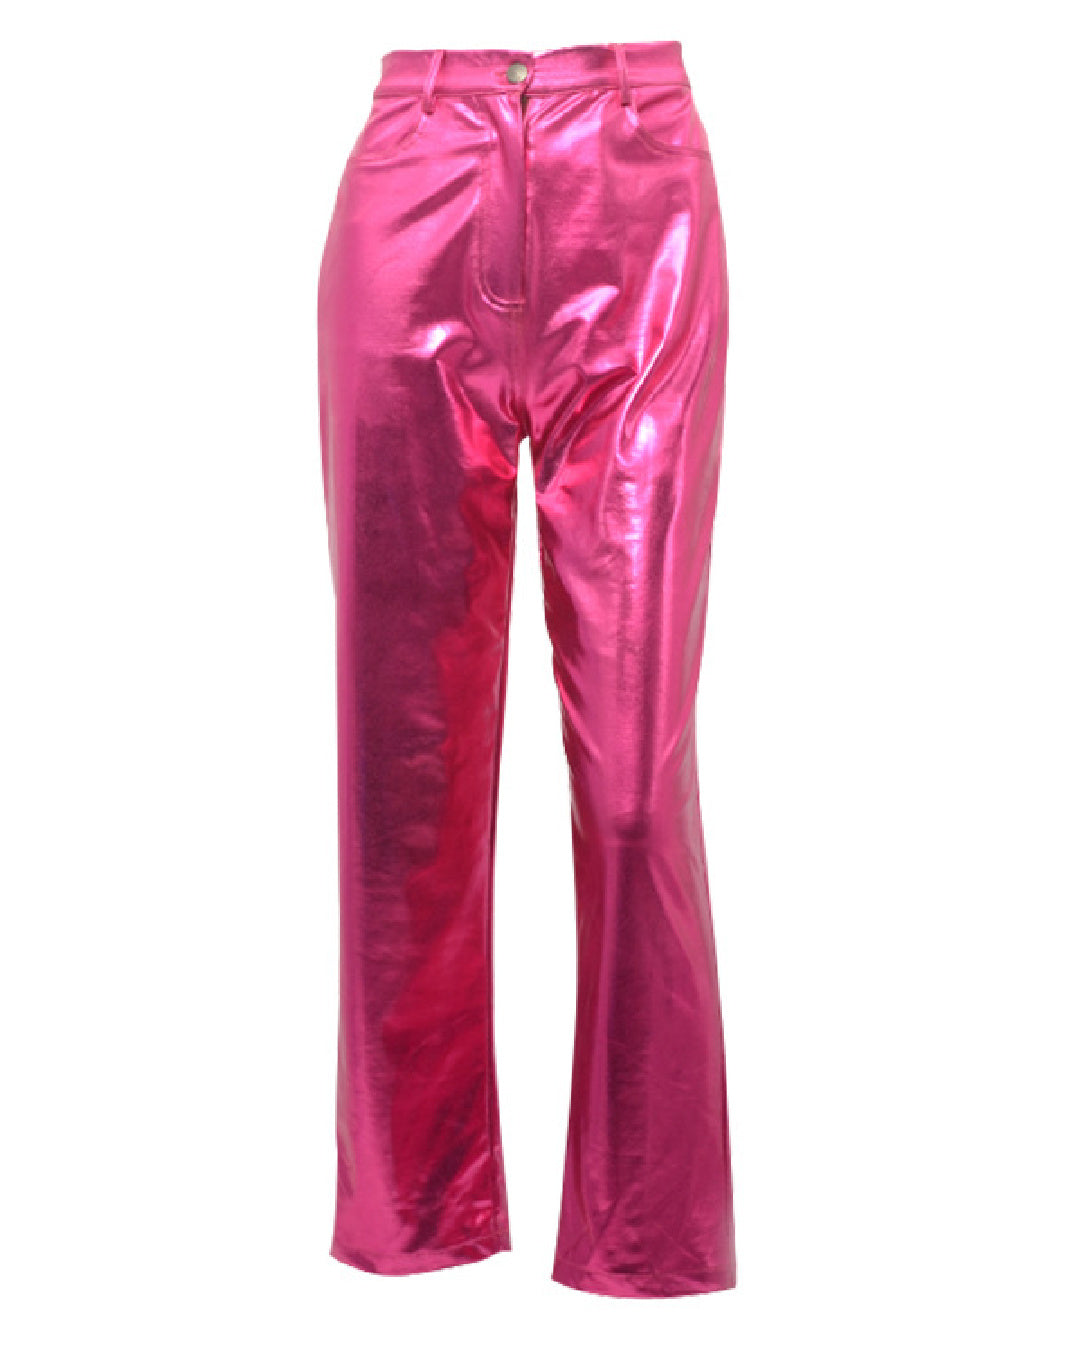 Travolta- the Metallic Faux Leather Disco Pants 5 Colors